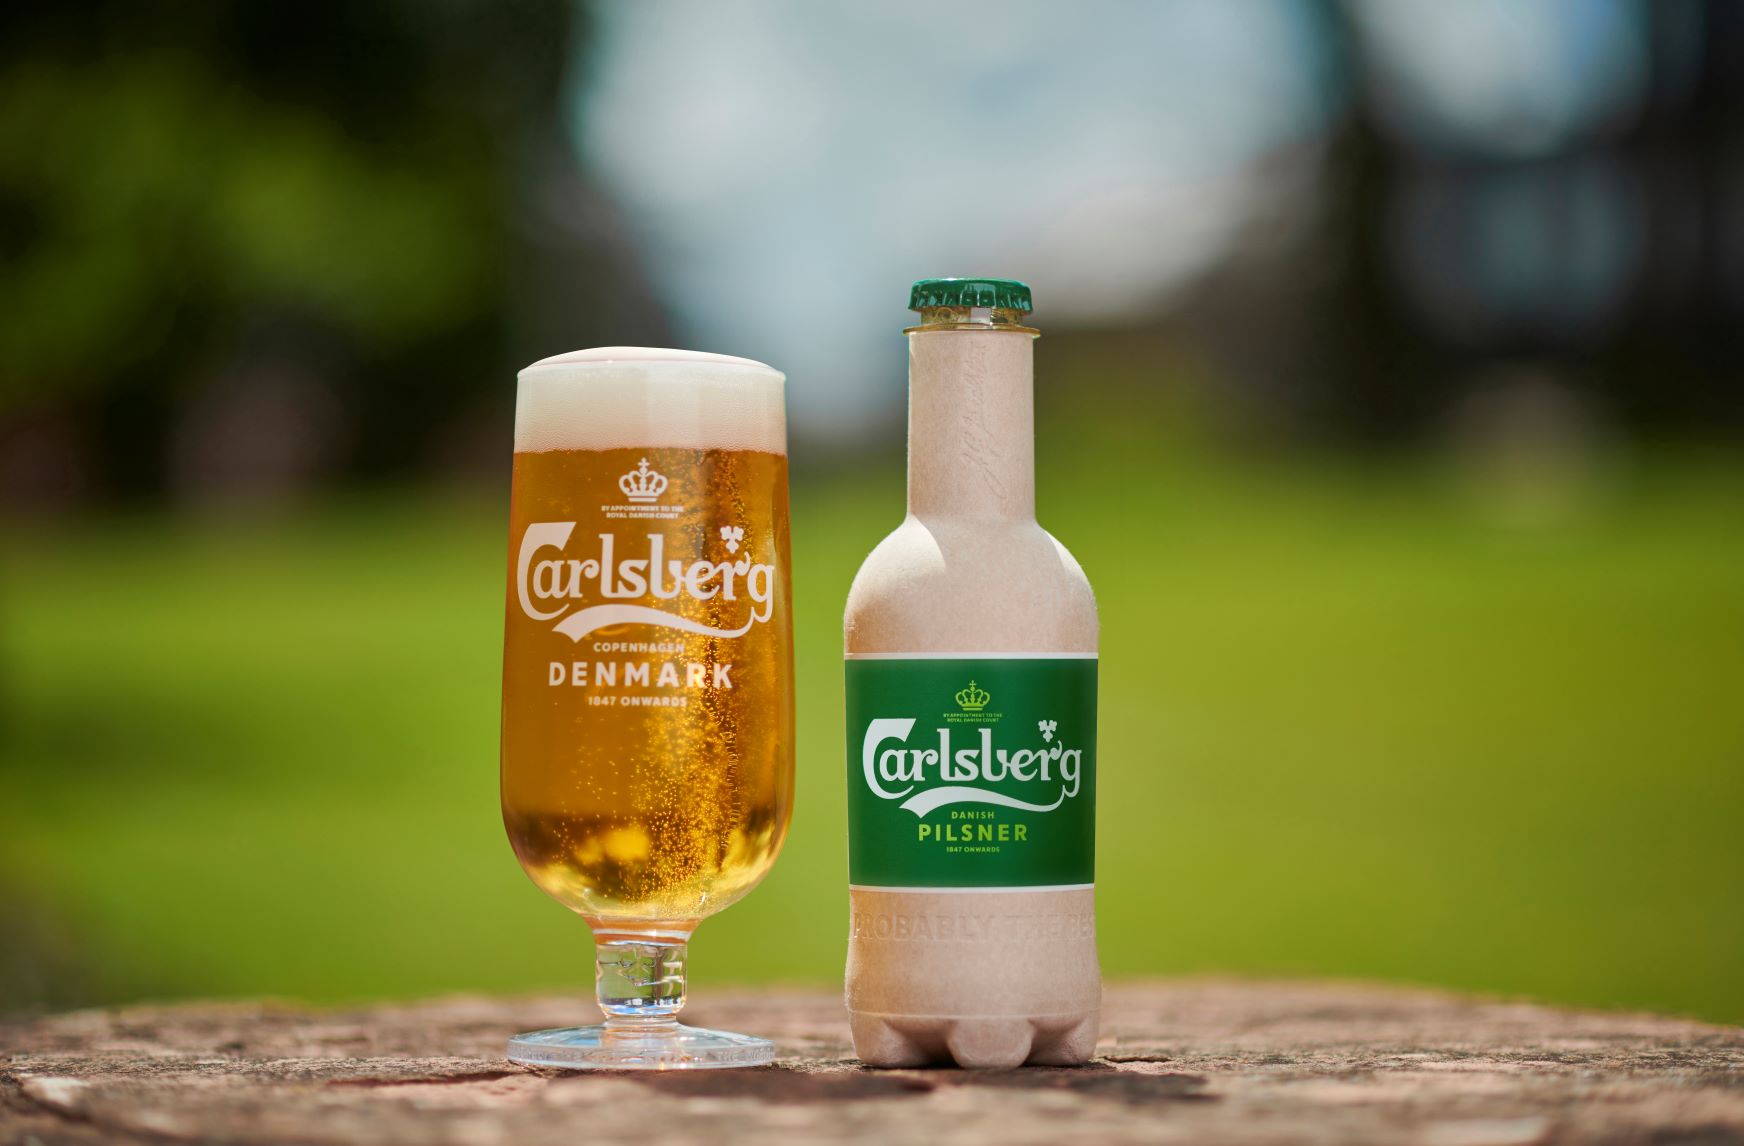 Carlsberg trials new bio-based Fibre Bottle